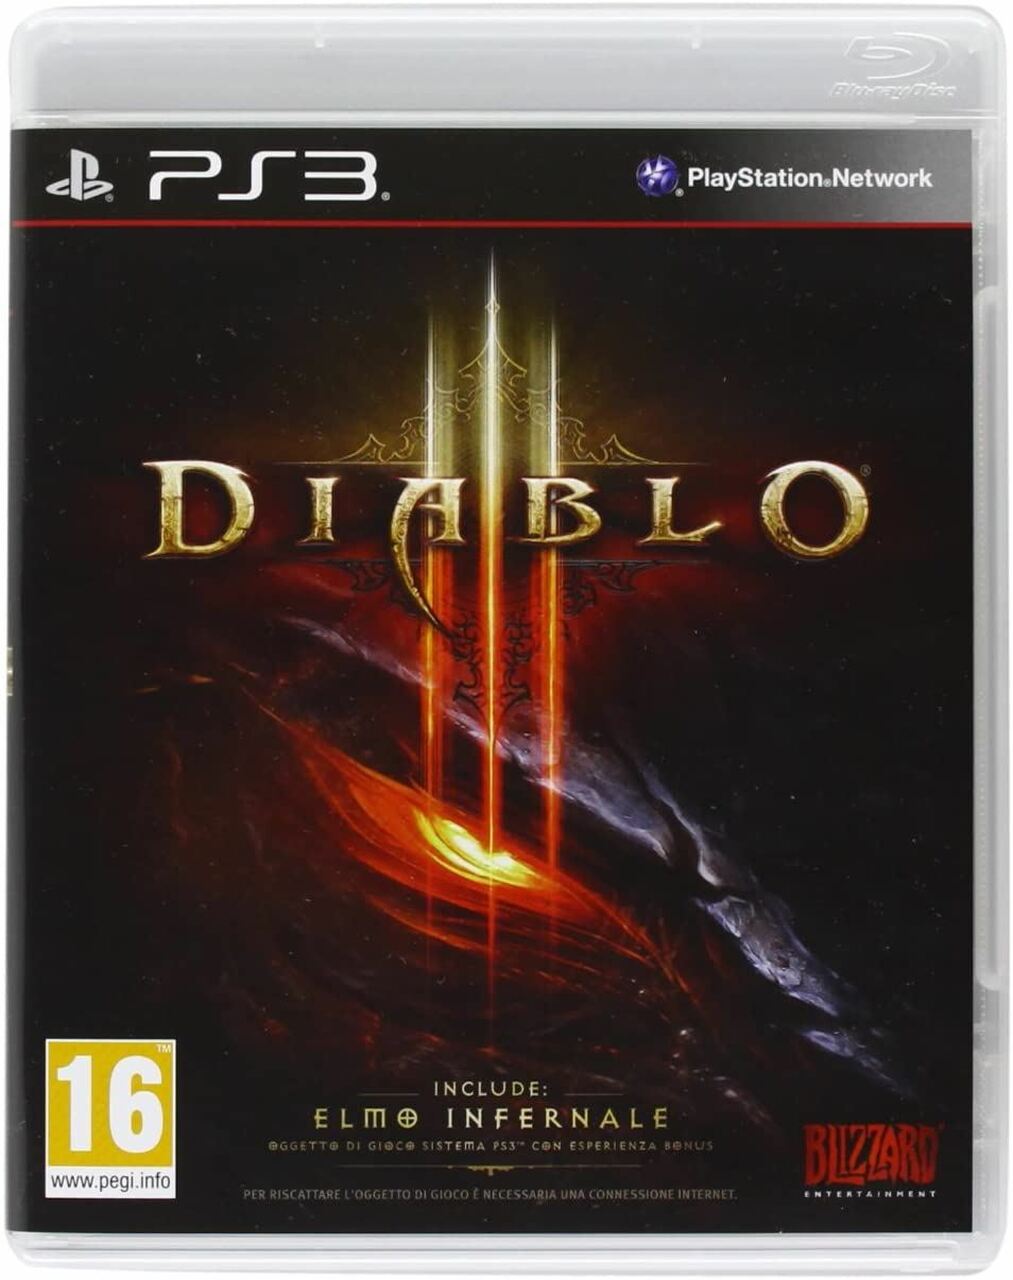 Diablo III ( Italian Box ) von Blizzard